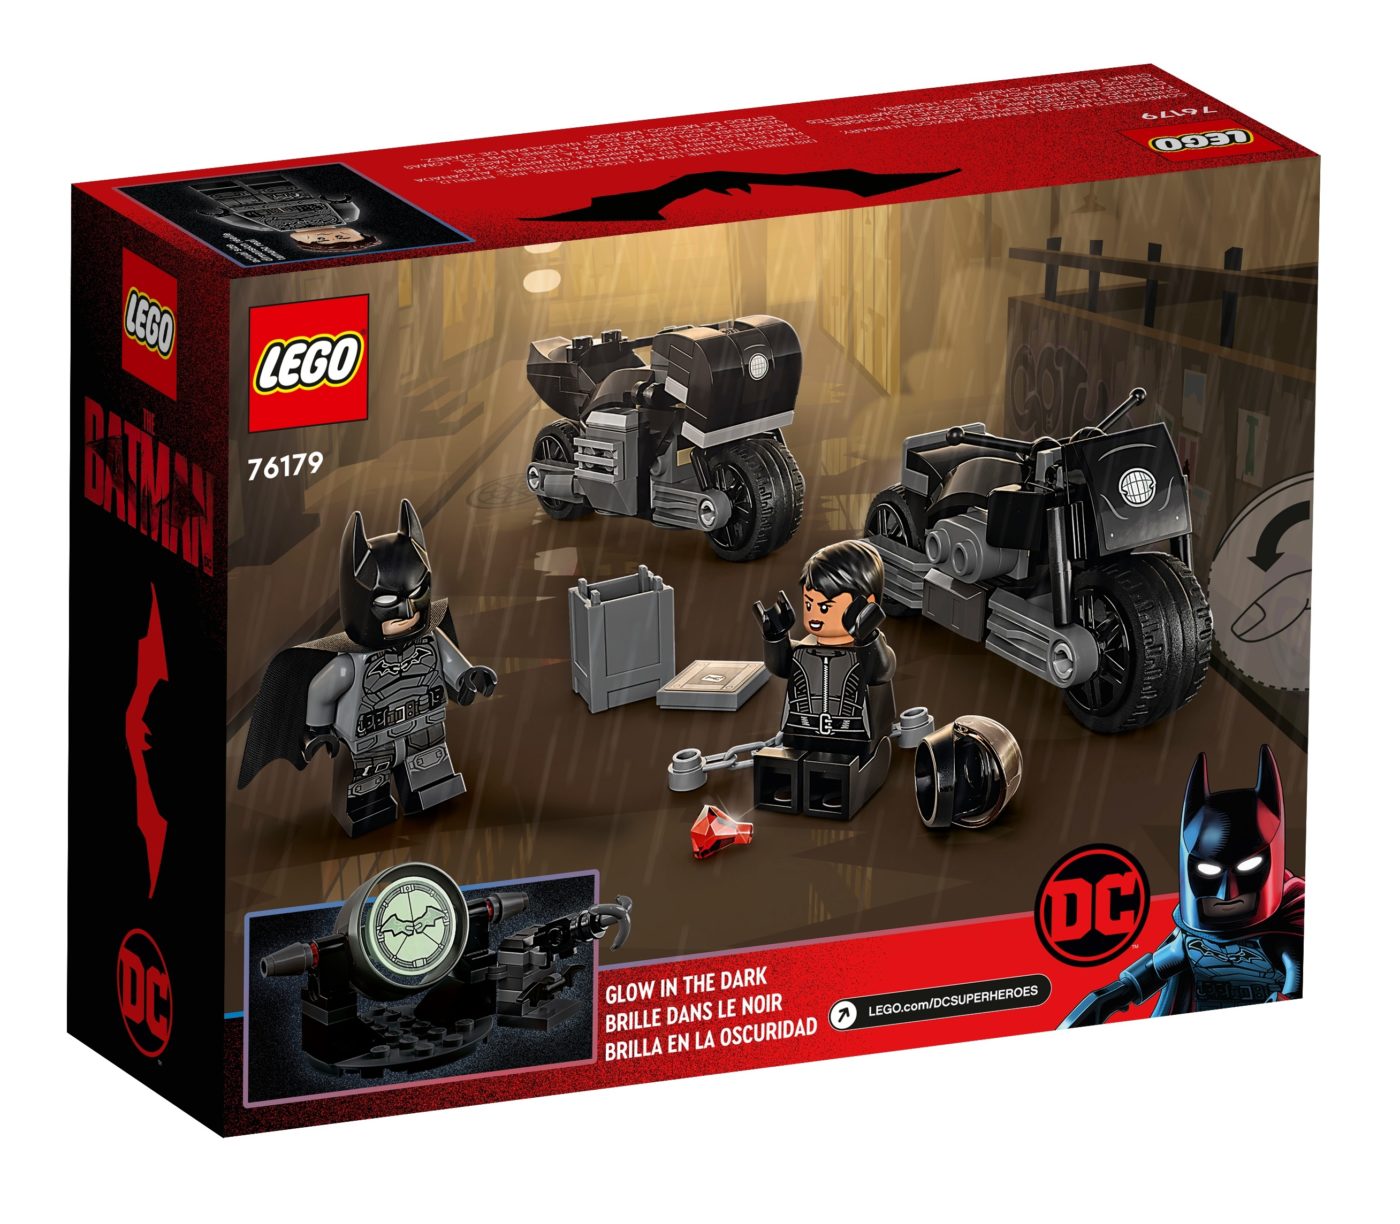 Upcoming The Batman movie LEGO sets revealed, including Technic